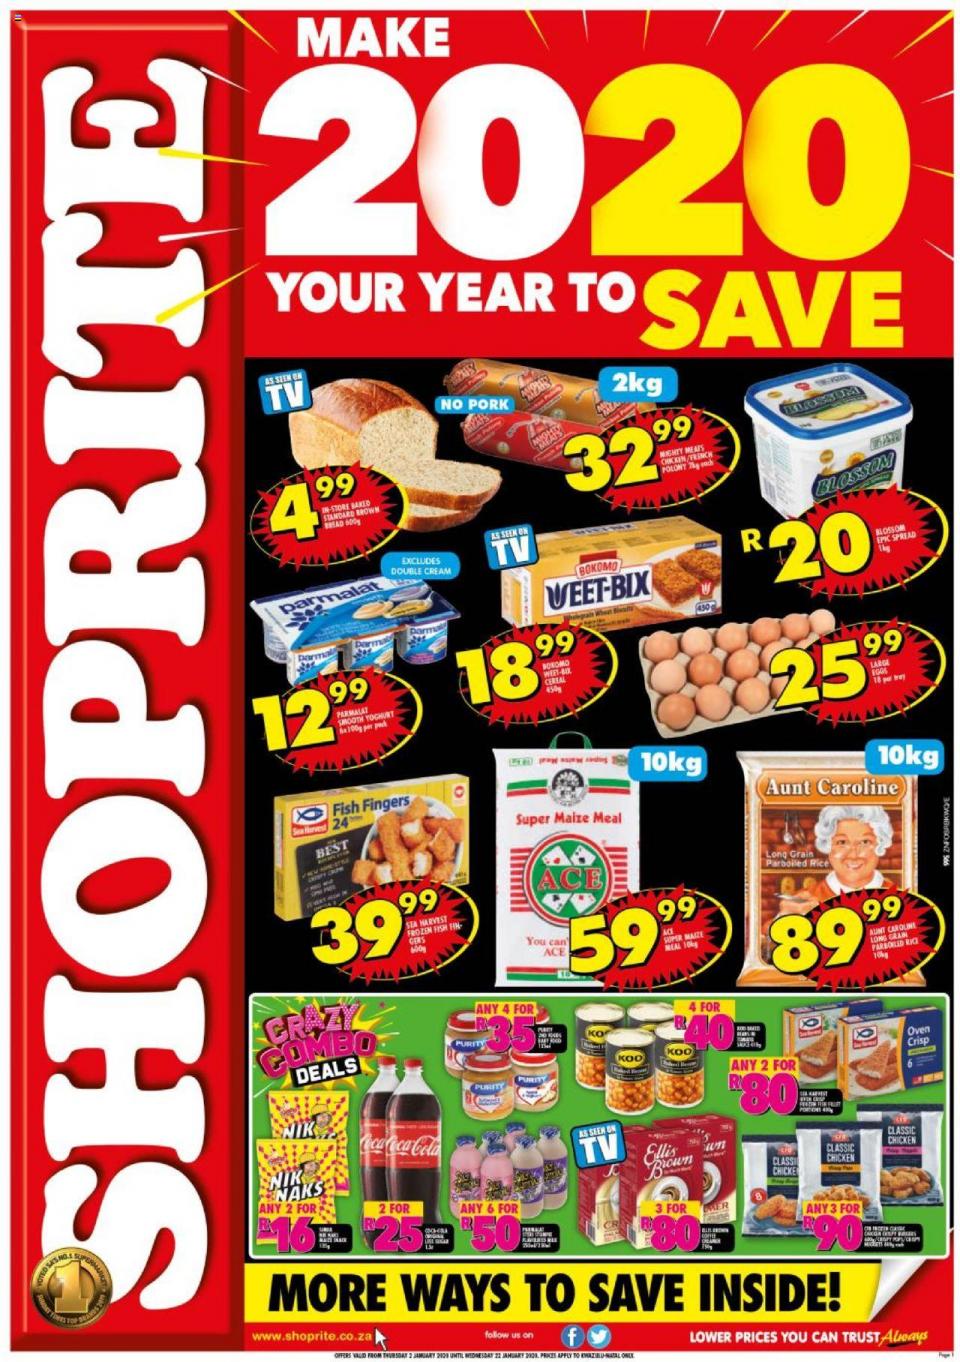 Shoprite Specials Jan Price Savings KwaZulu-Natal 2 January 2020